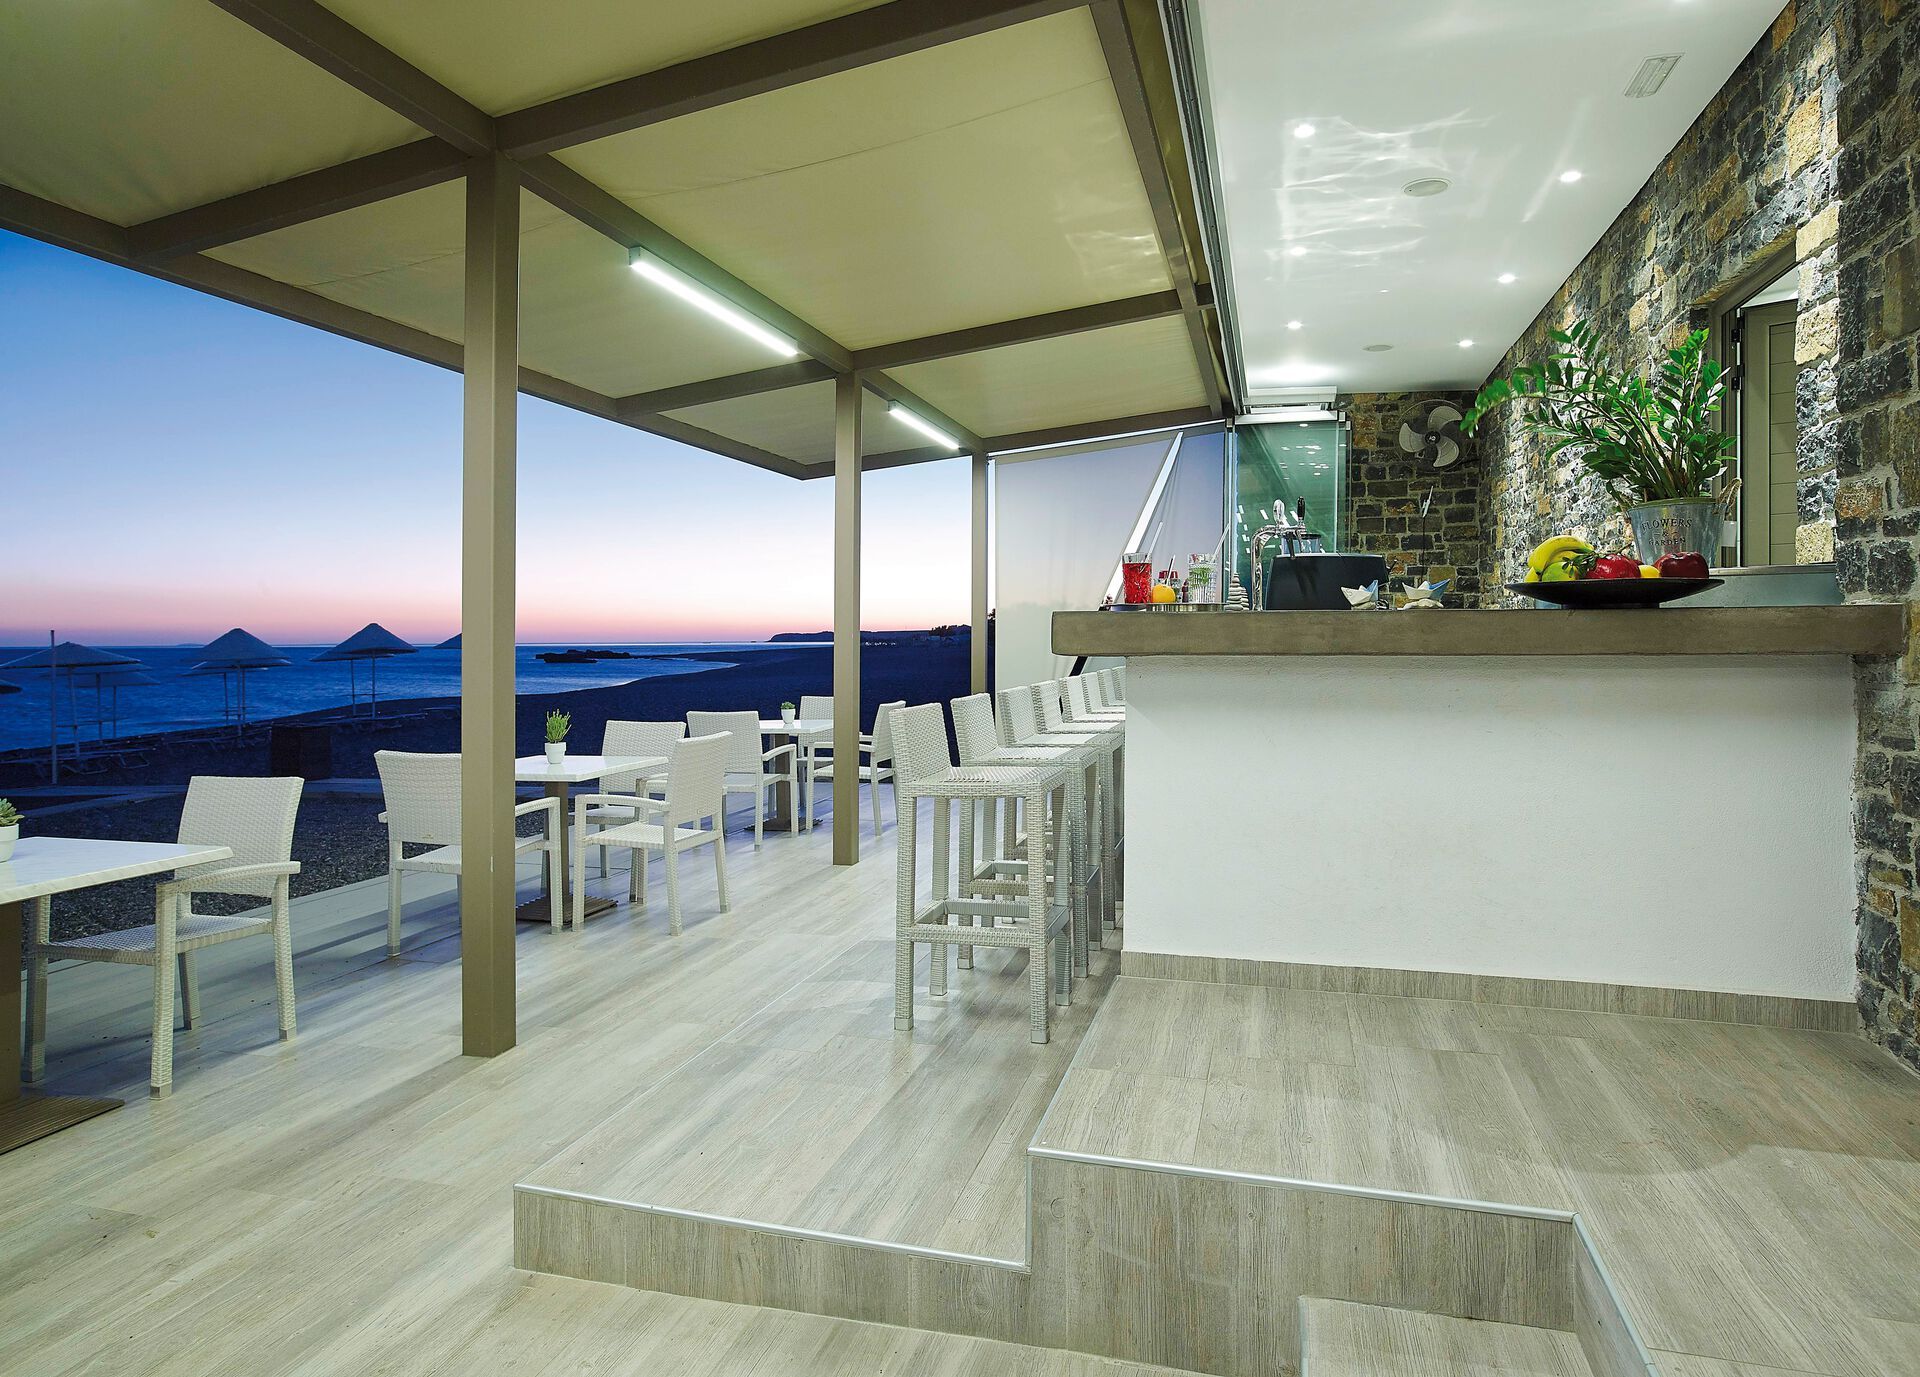 Crète - Ierapetra - Grèce - Iles grecques - Hôtel CHC Coriva Beach 3*